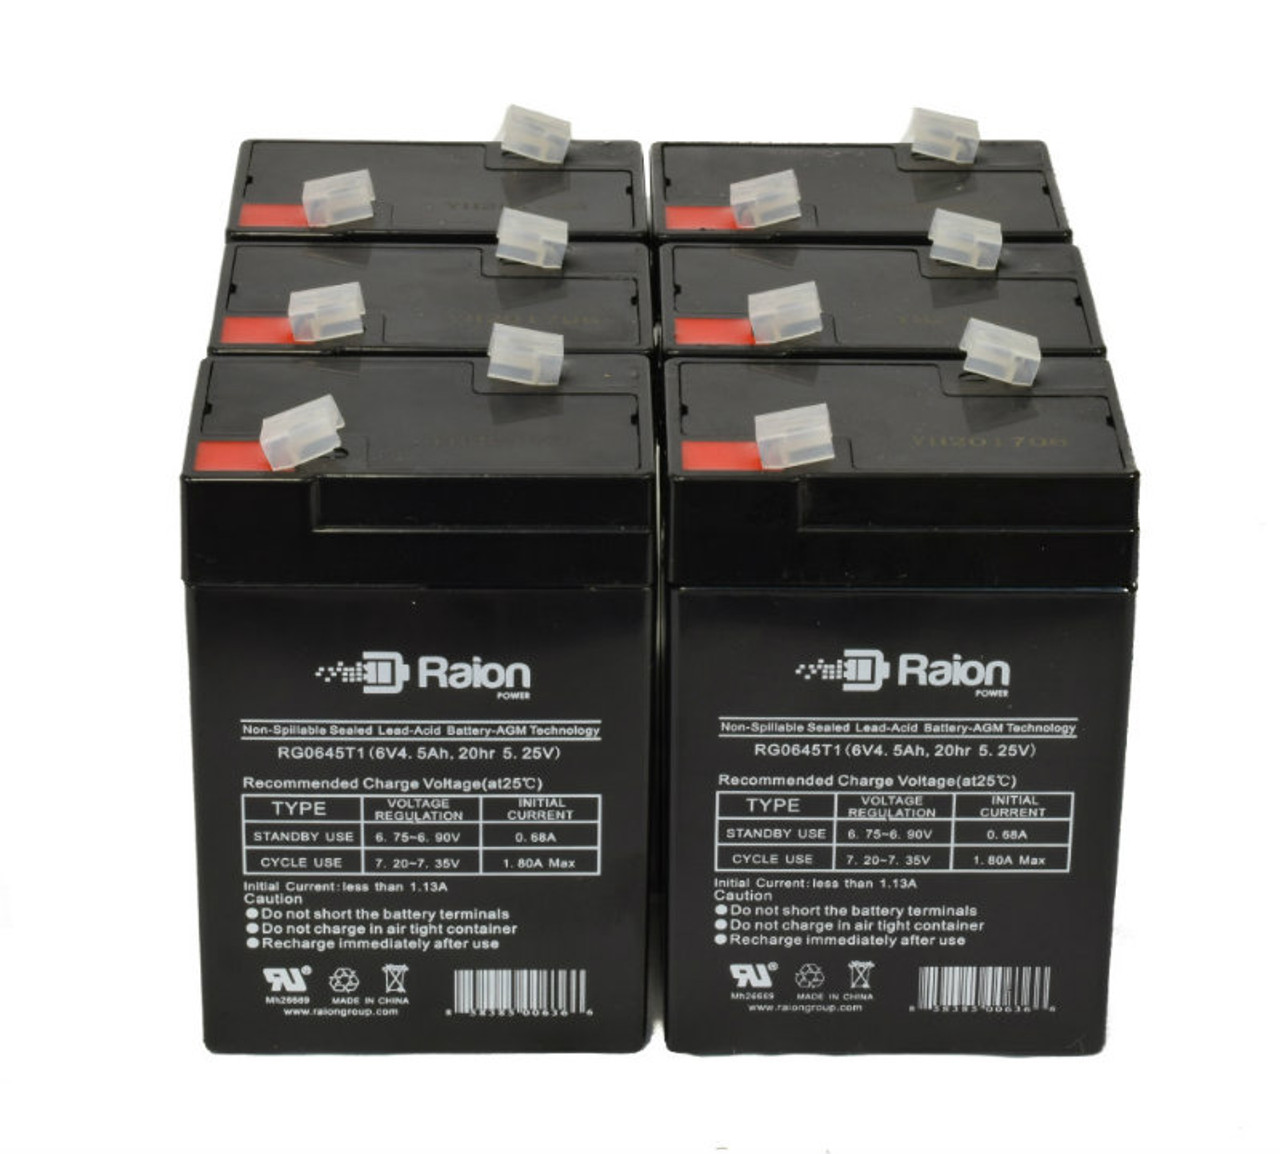 Raion Power 6 Volt 4.5Ah RG0645T1 Replacement Battery for Long Way LW-3FM5J - 6 Pack